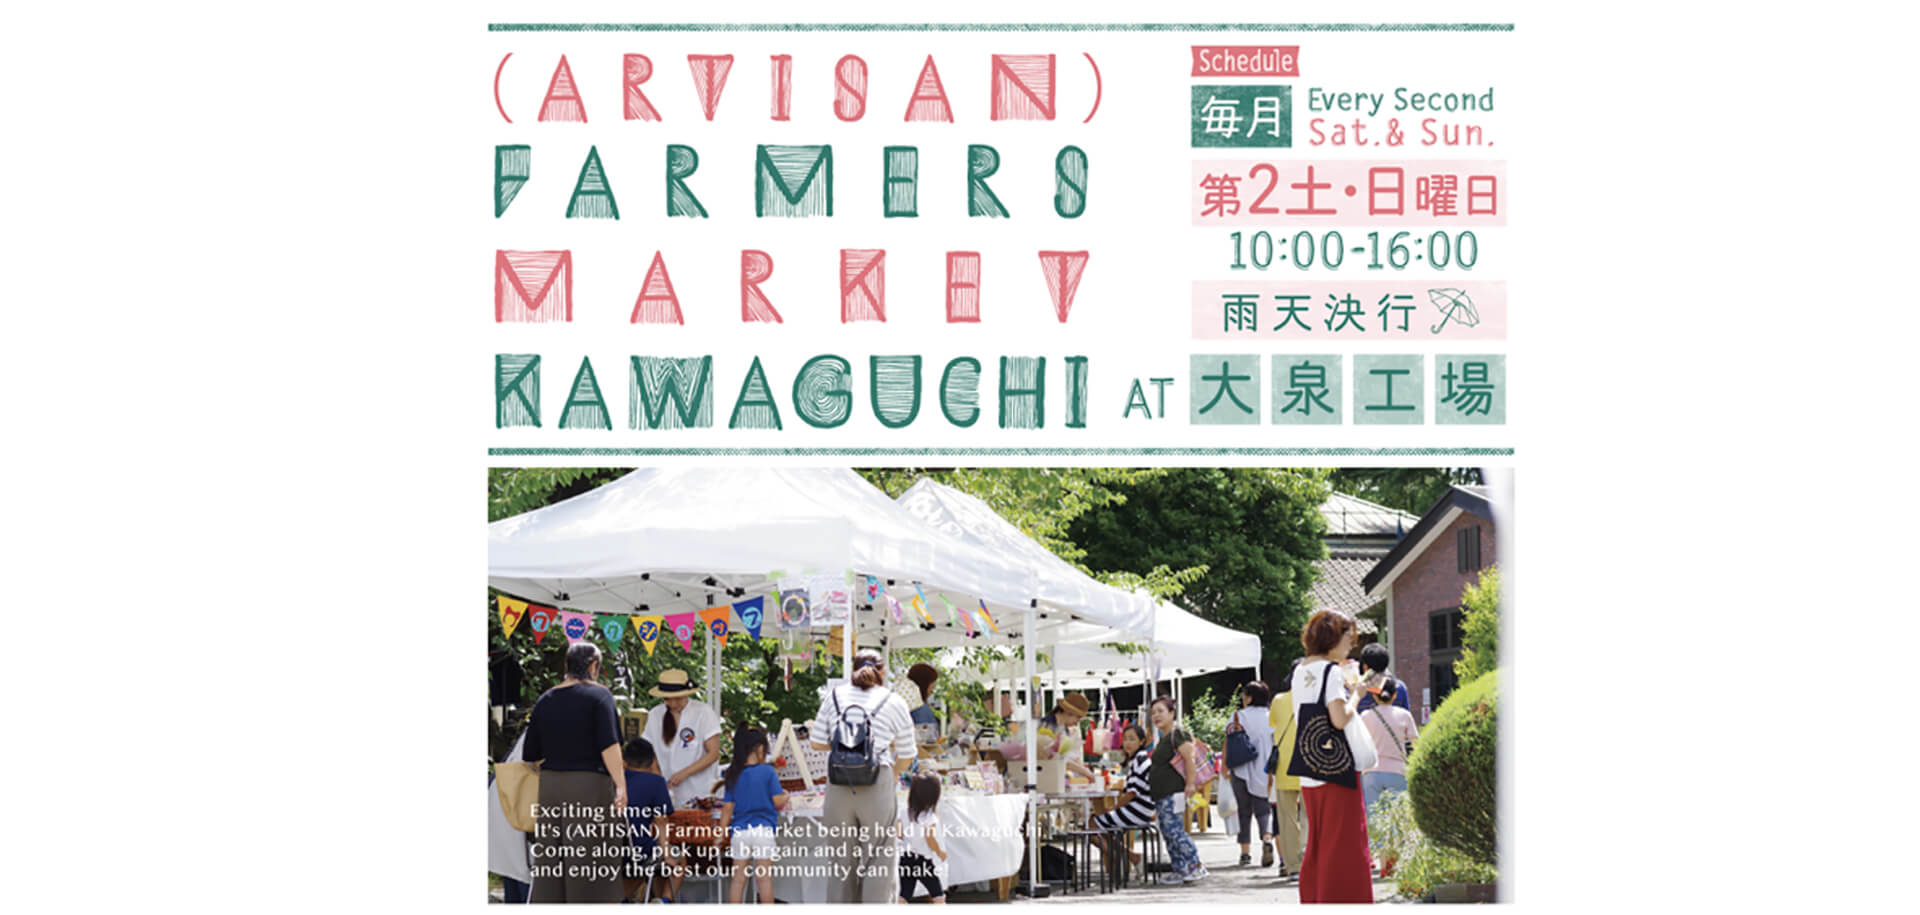 (ARTISAN) FARMERS MARKET KAWAGUCHI 　大泉工場